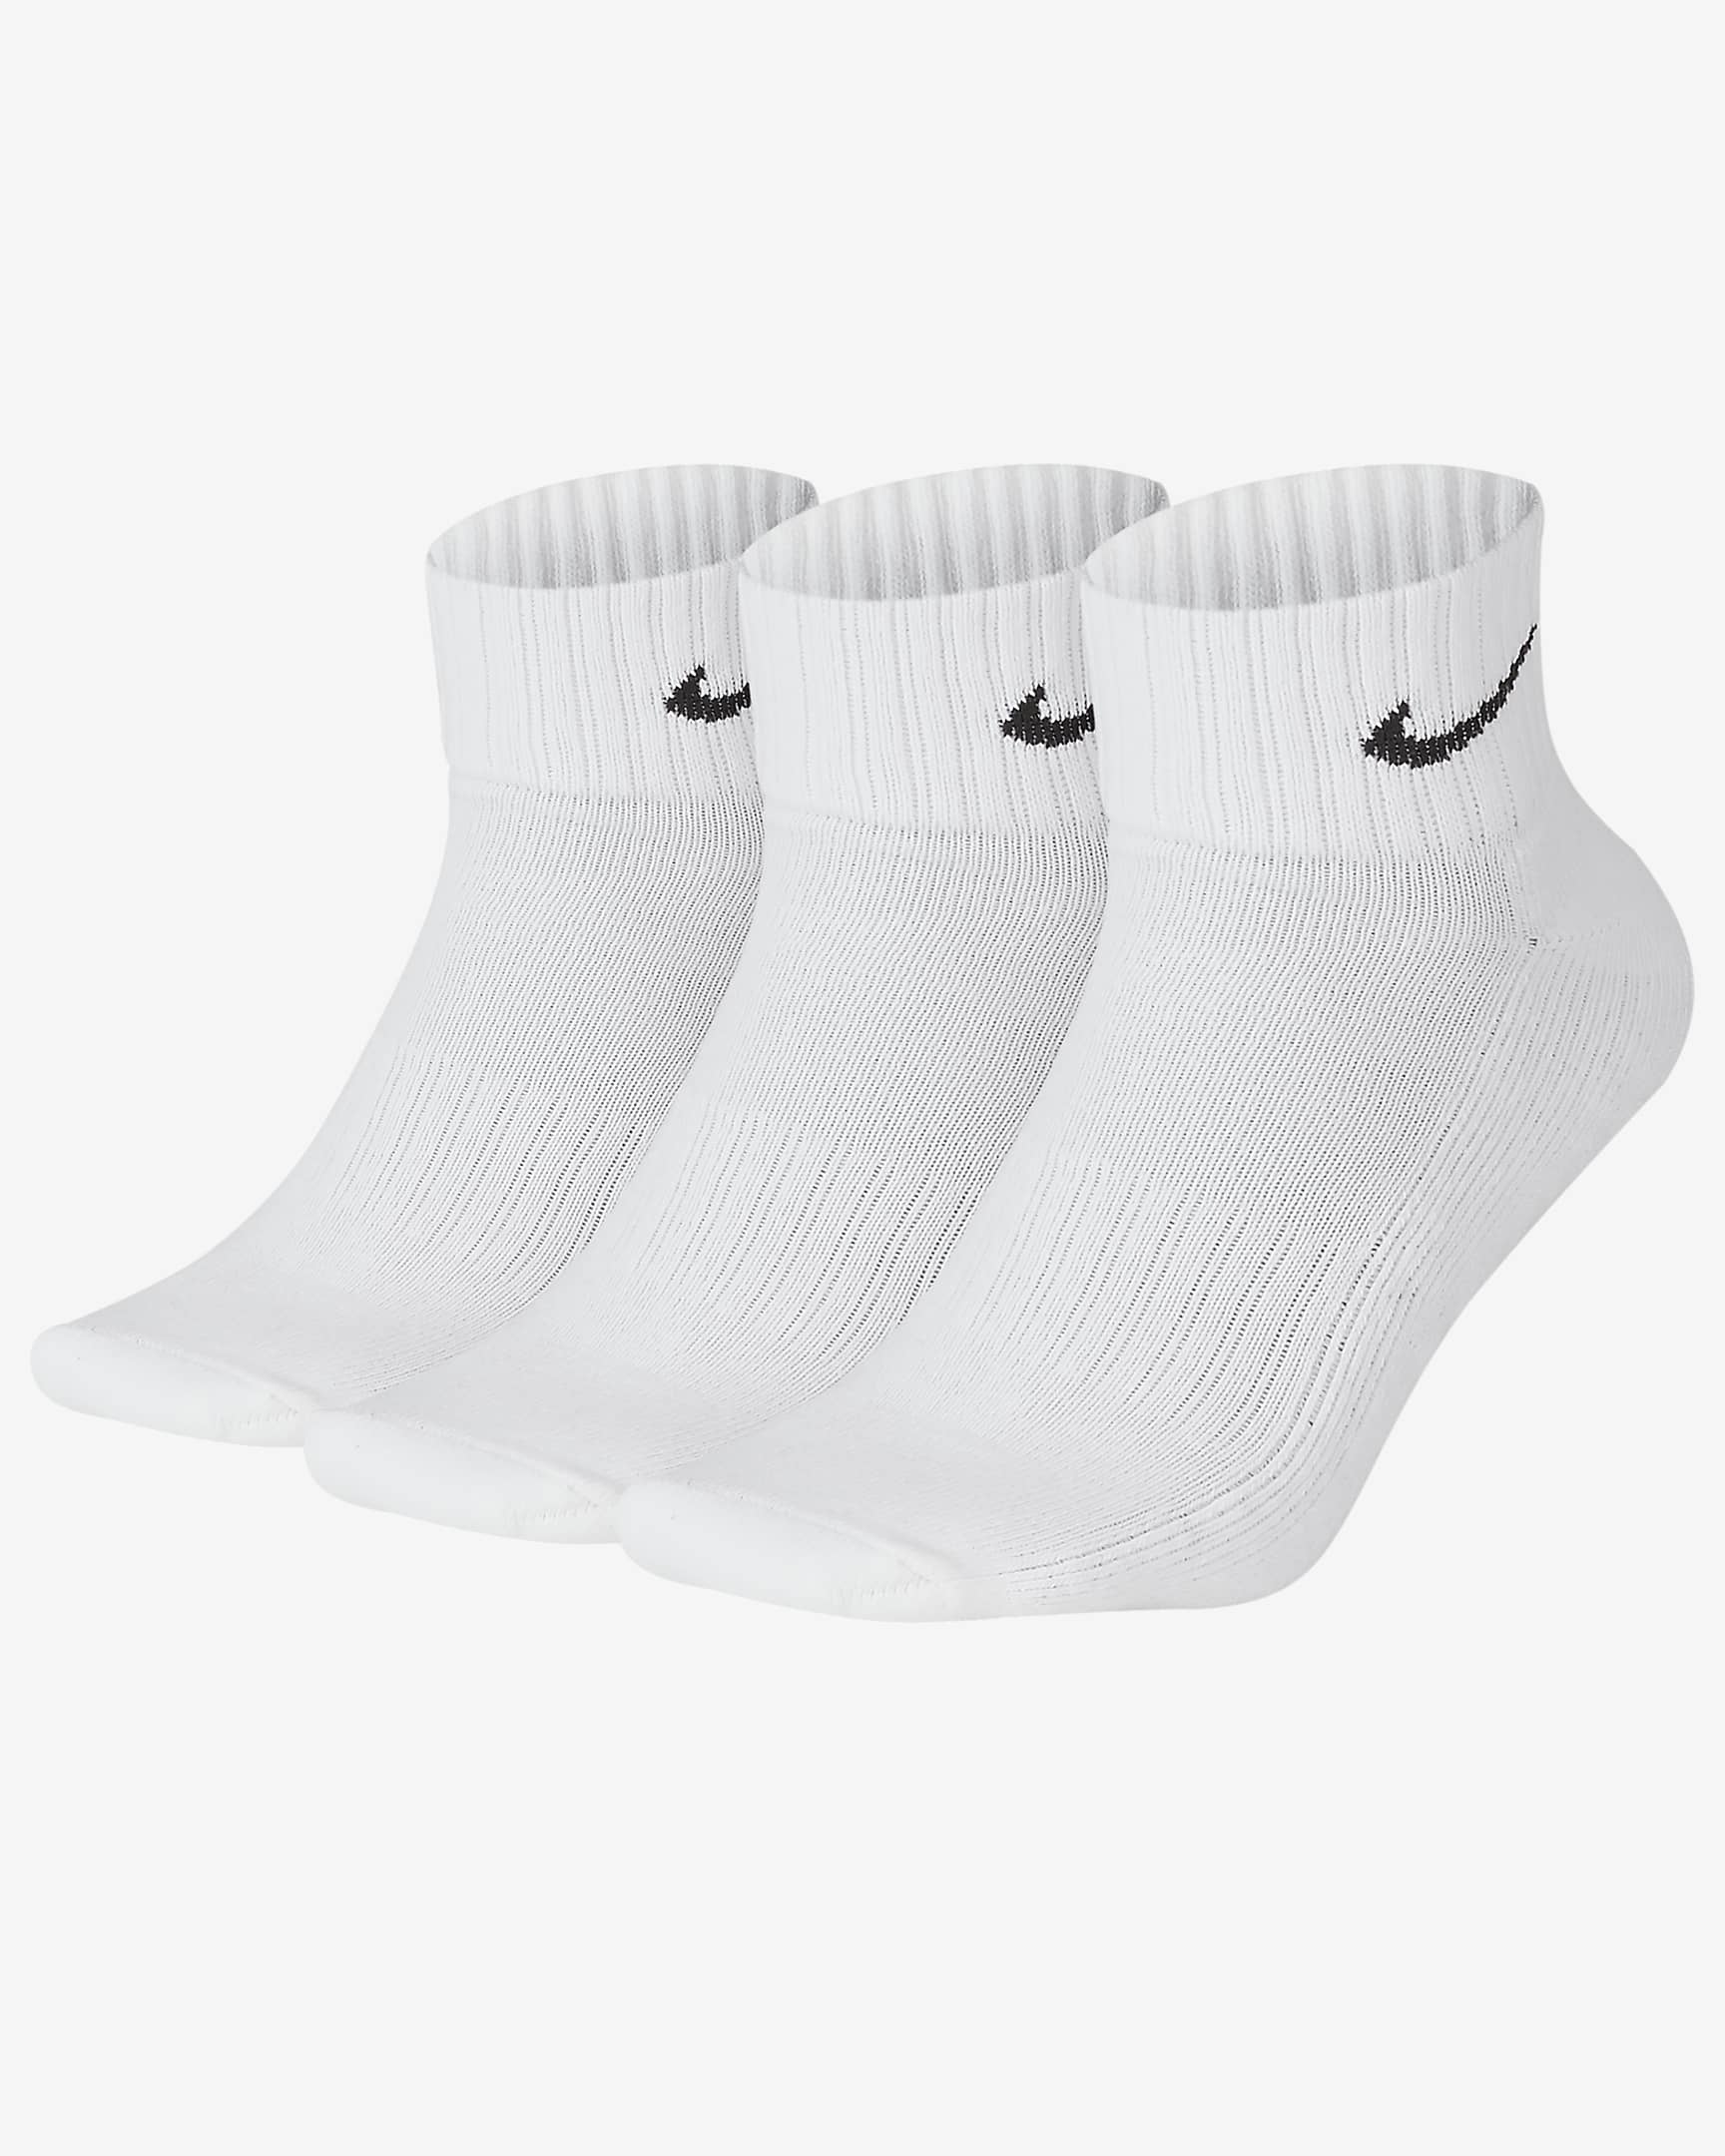 Nike Cushioned Ankle Socks (3 Pairs) - White/Black